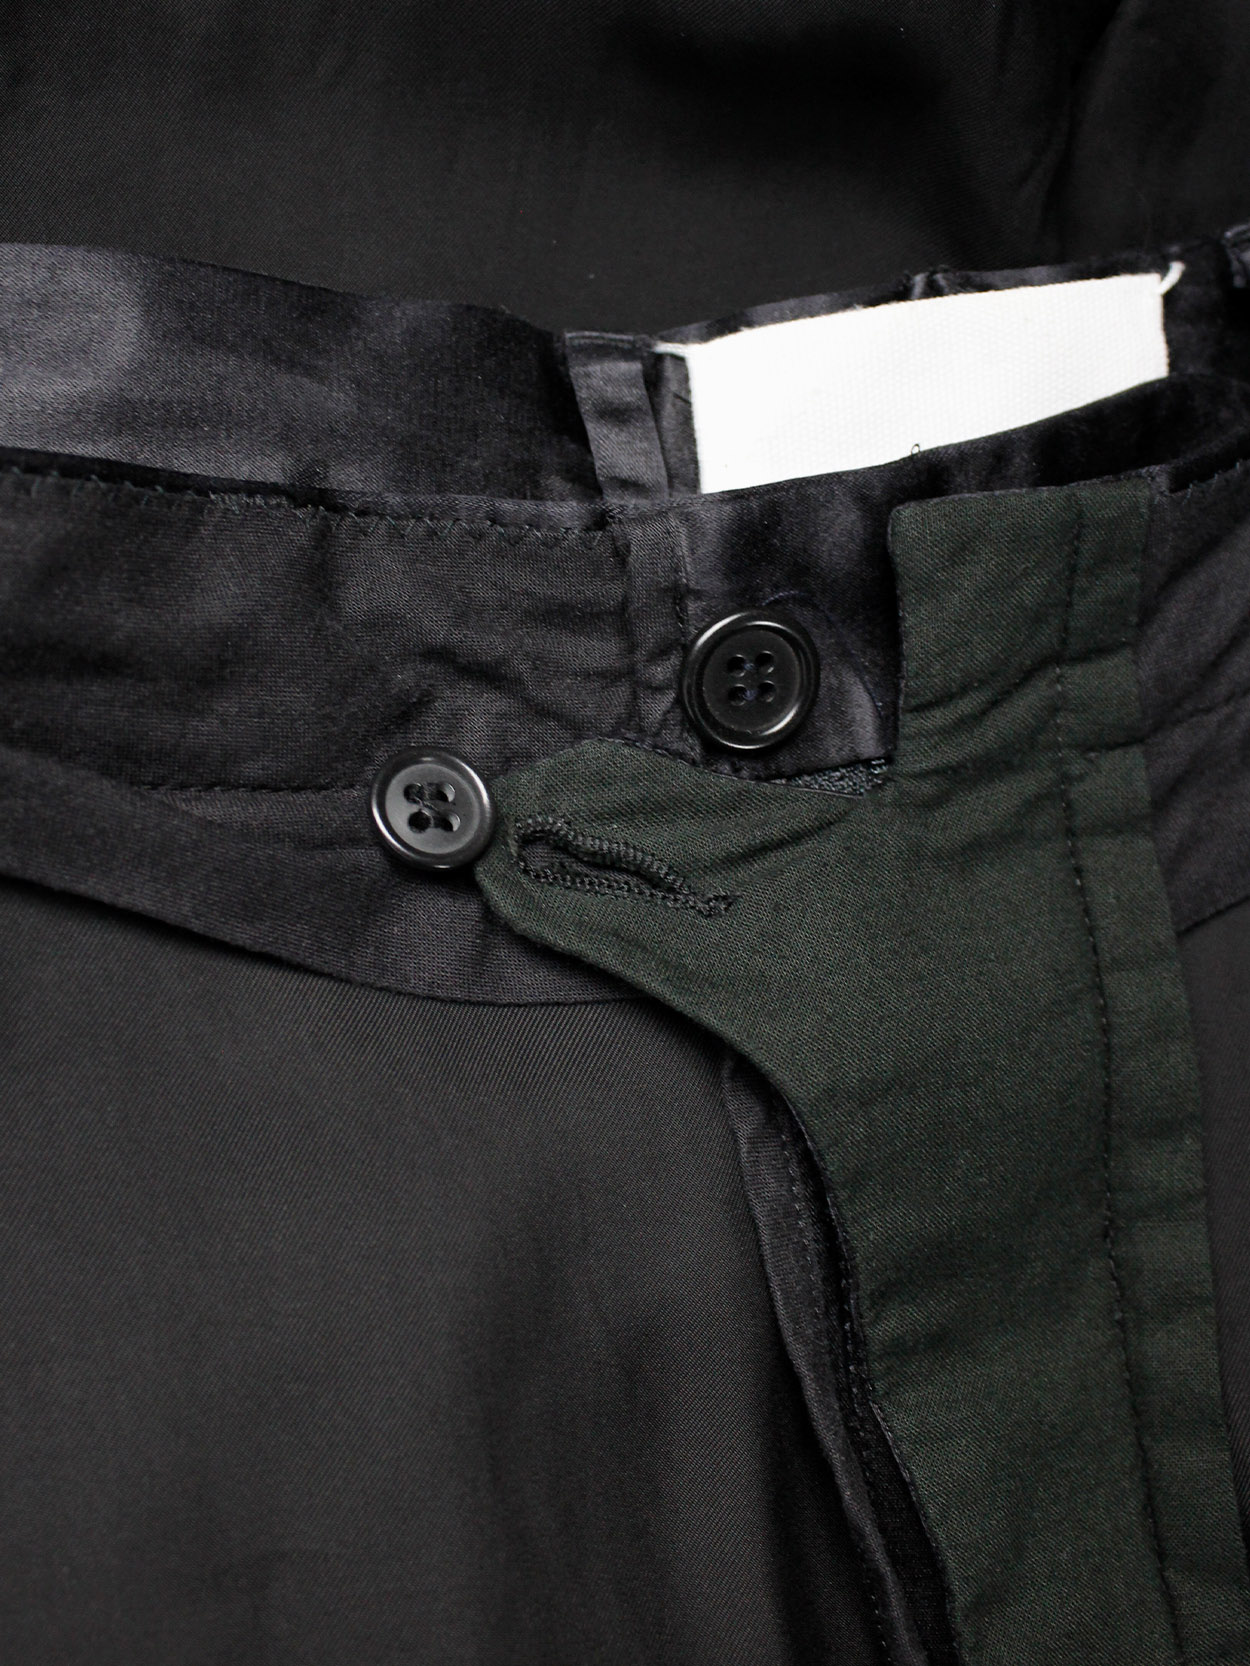 Maison Martin Margiela black trousers worn inside-out — spring 2005 - V ...